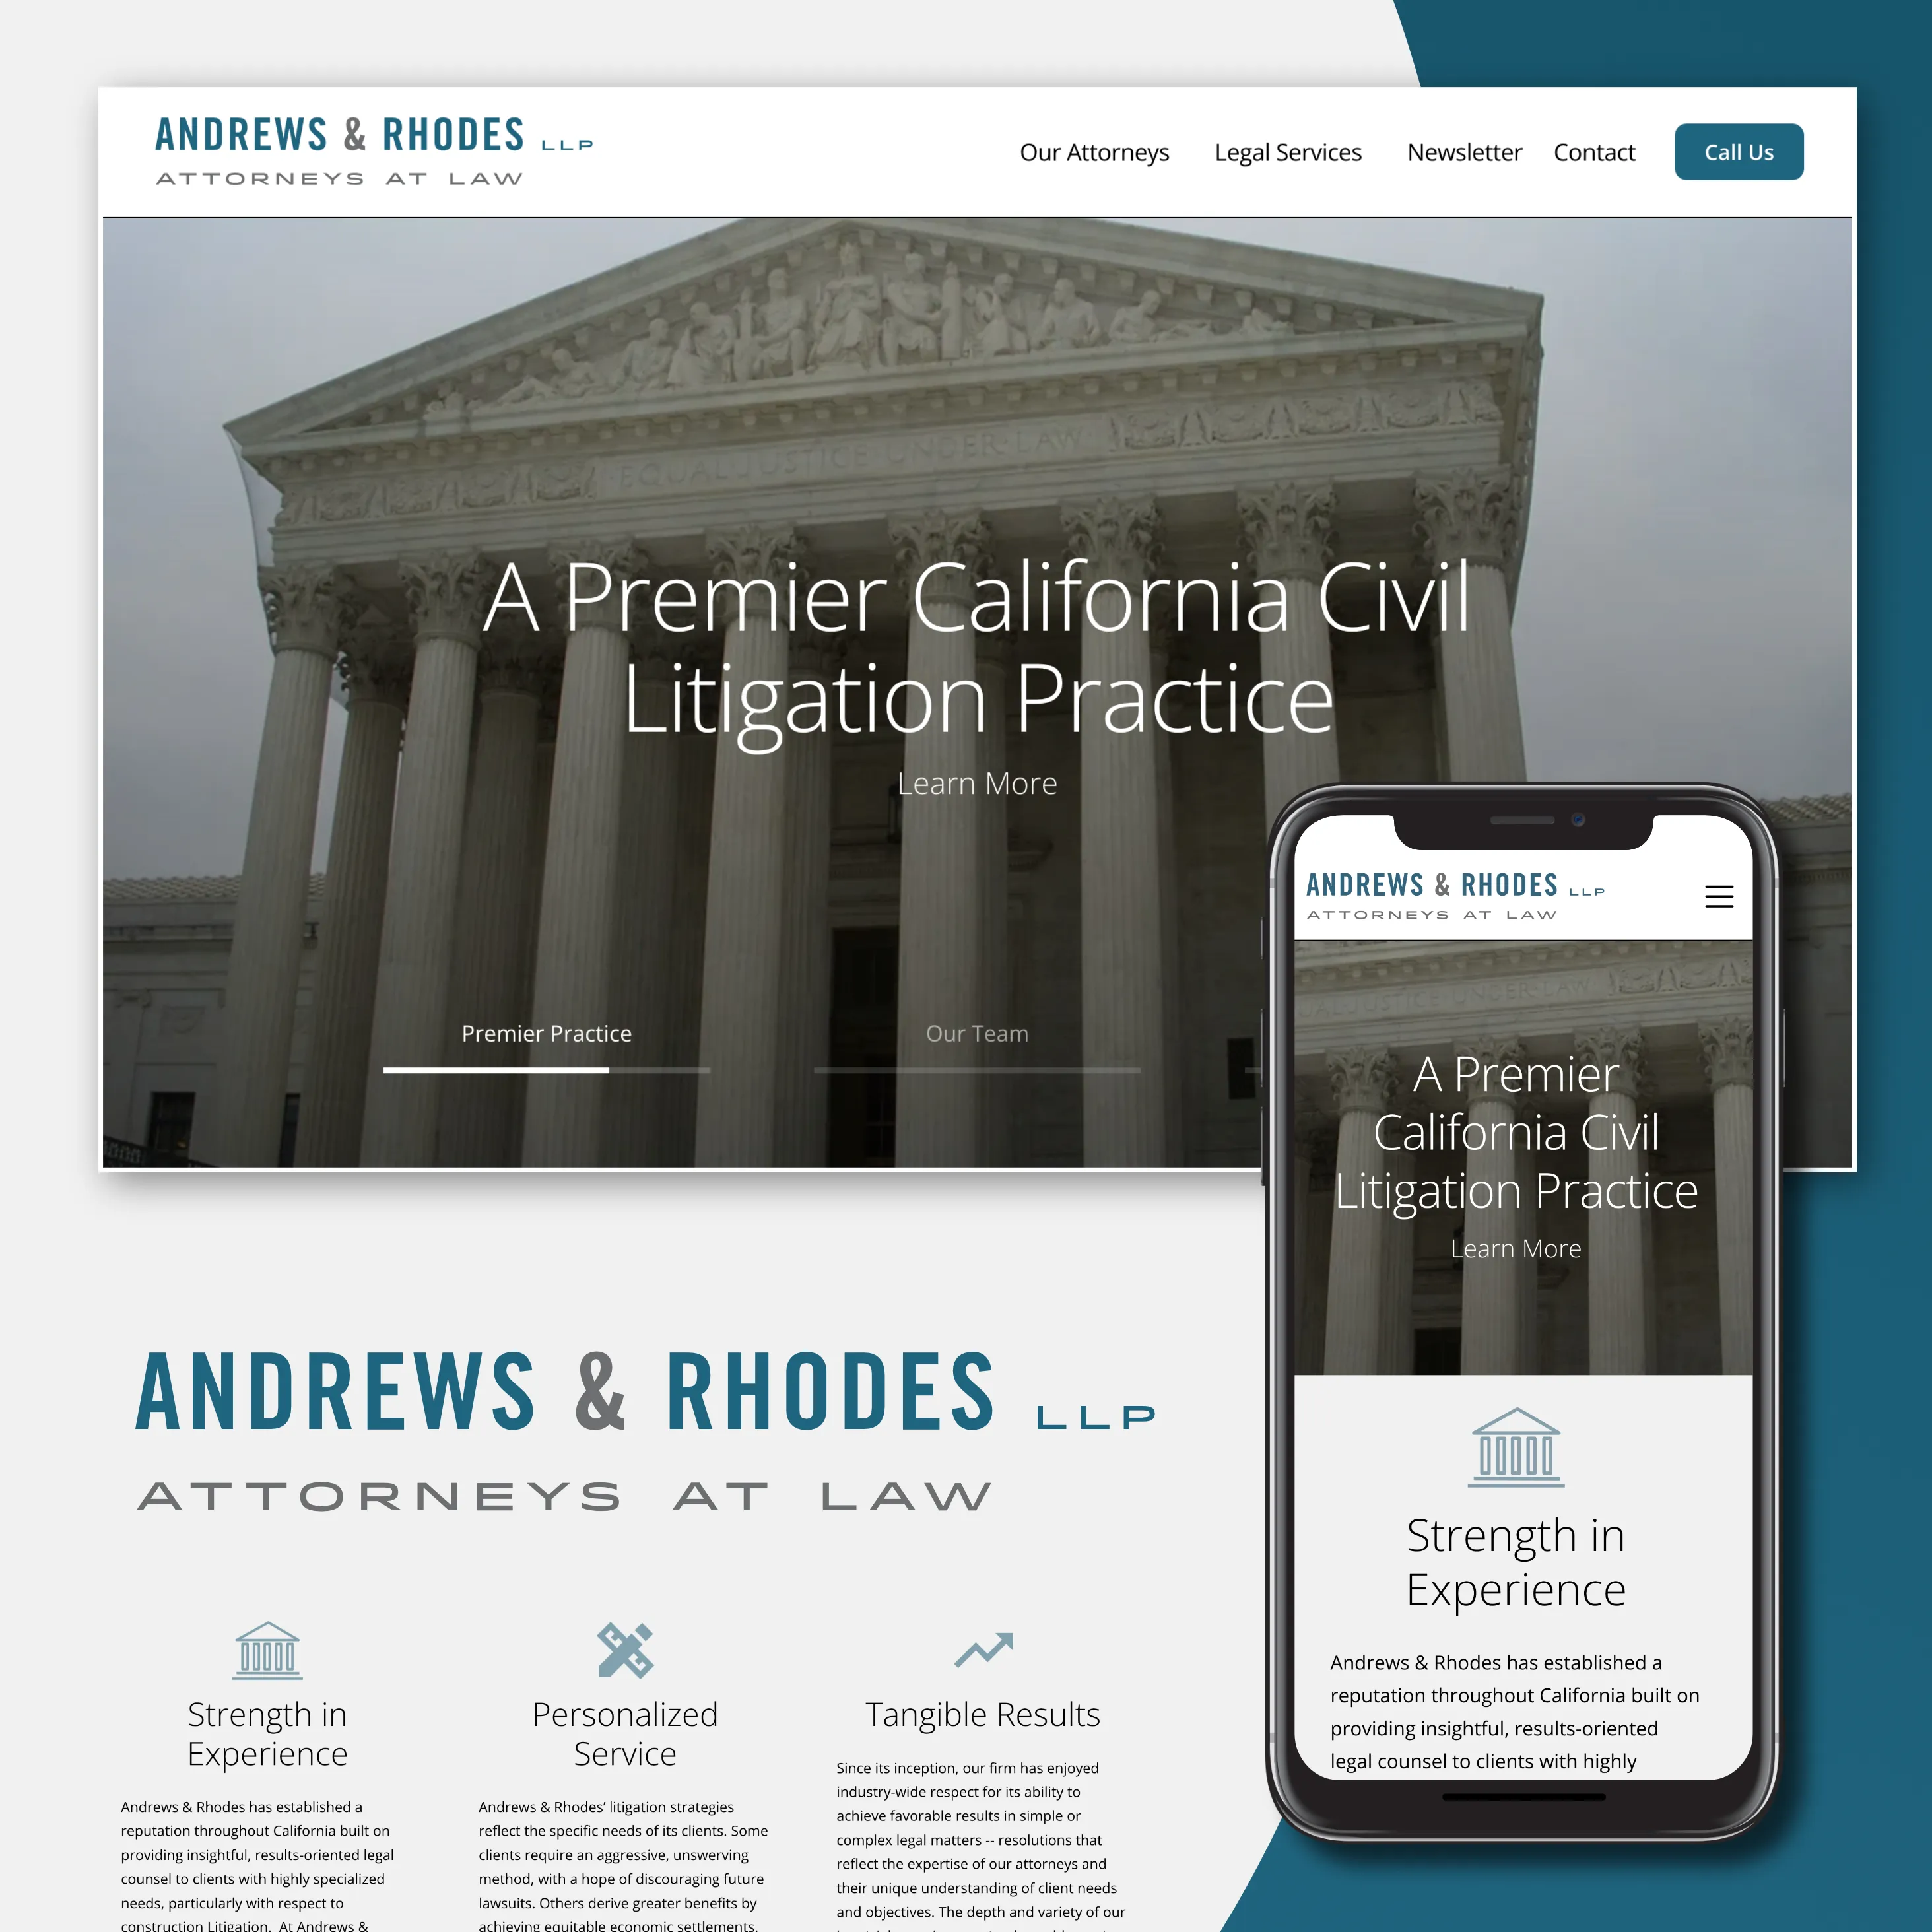 Andrews & Rhodes Case Study